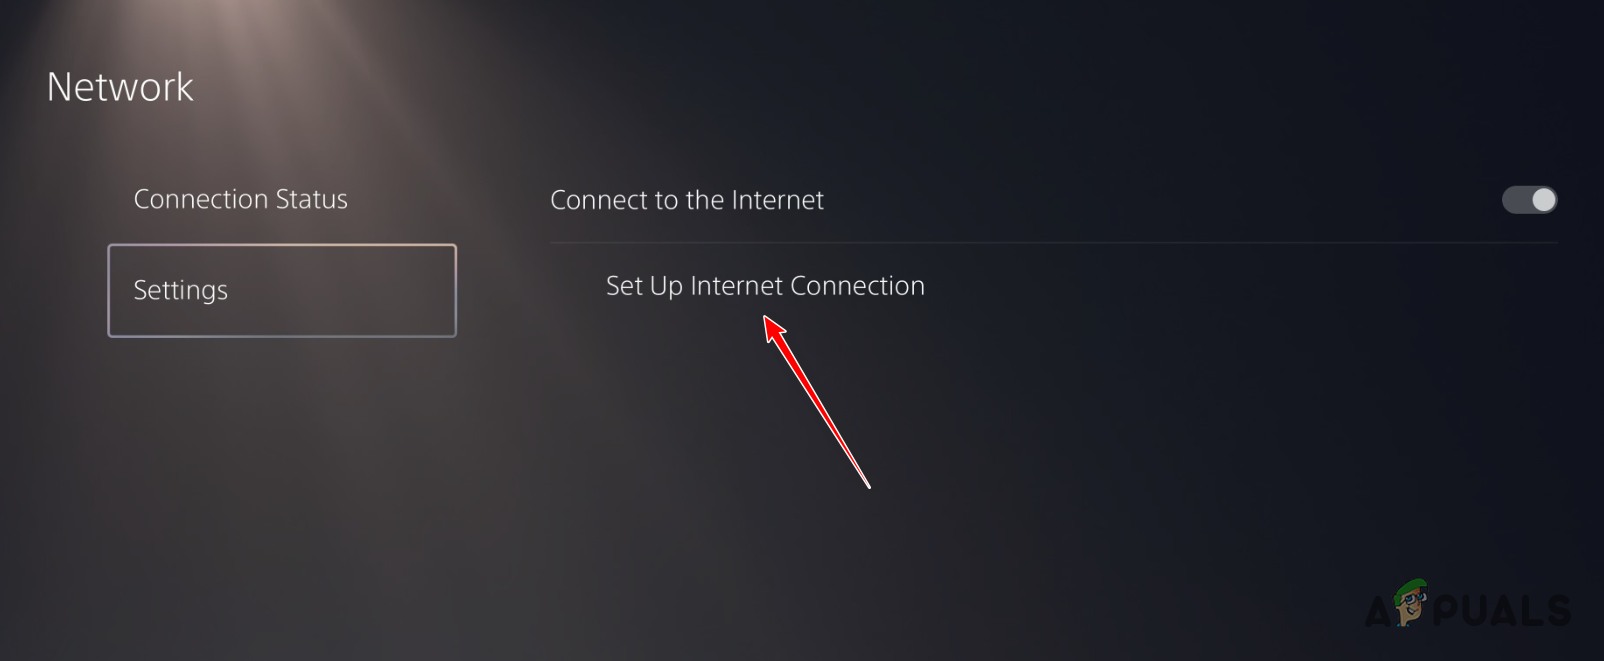 Navigating to Set Up Internet Connection